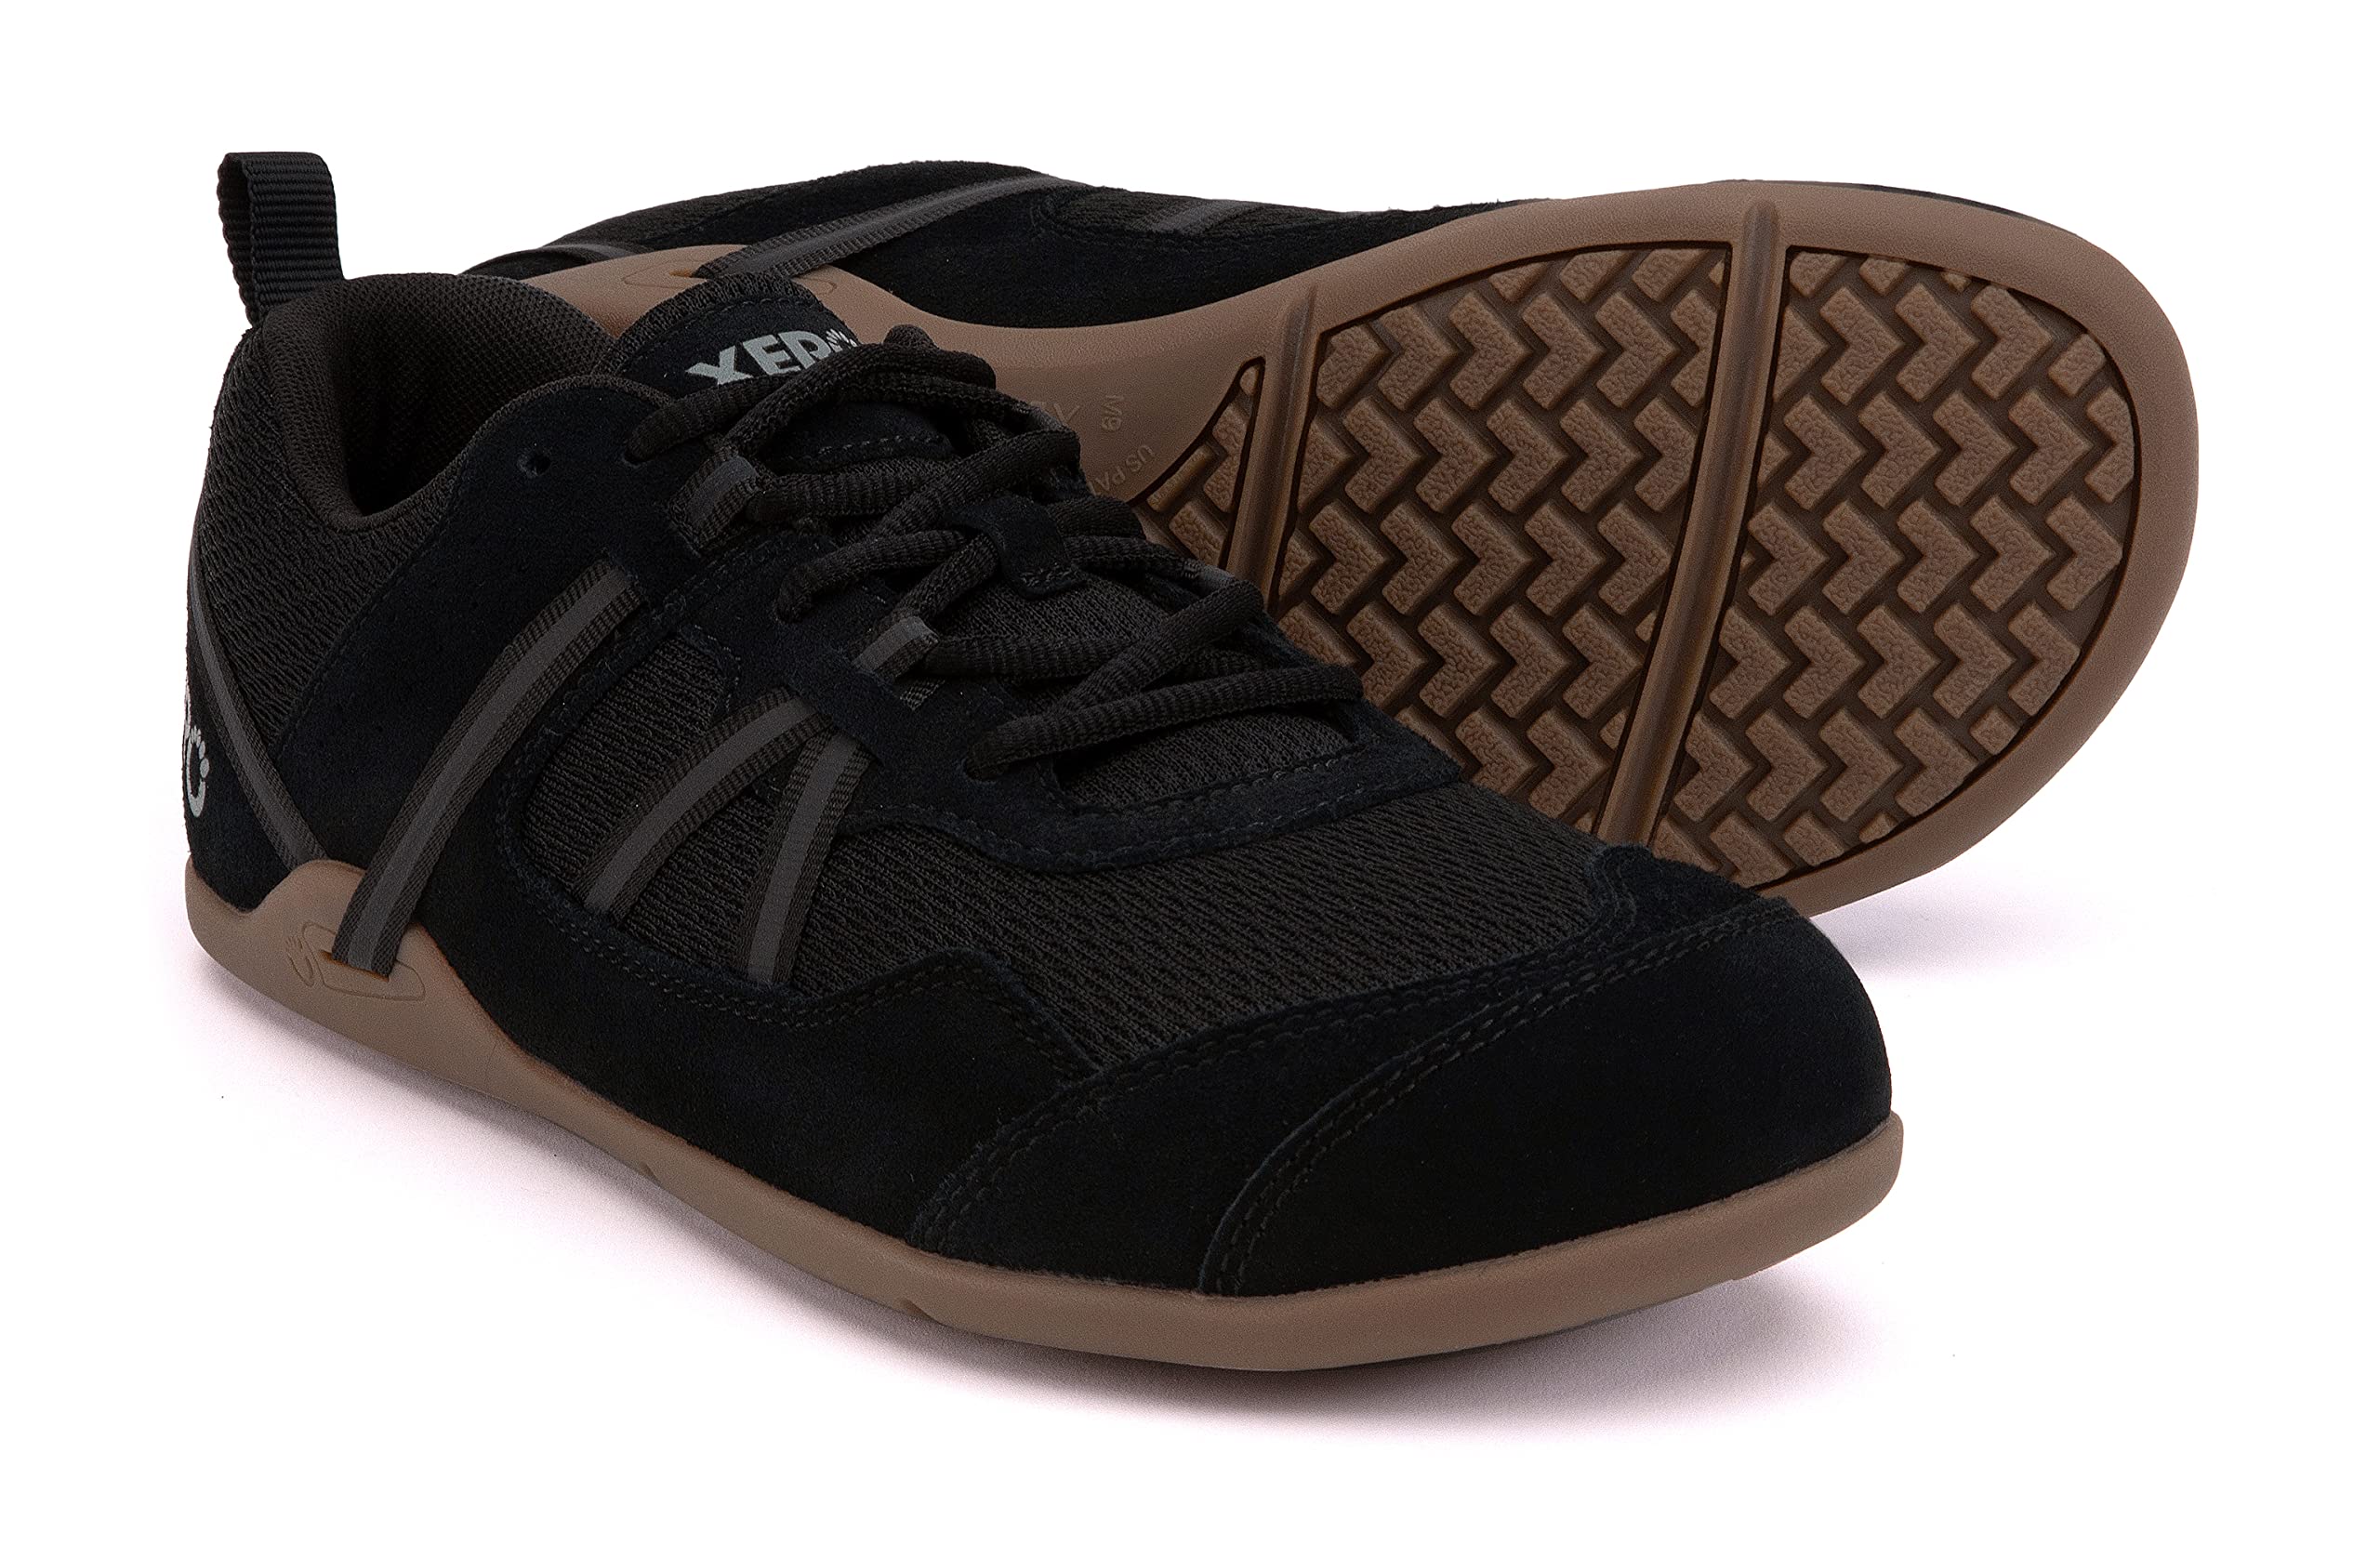 Xero Shoes Men’s Prio Suede Cross Training Shoe - Comfortable Performance Running Shoes for Men